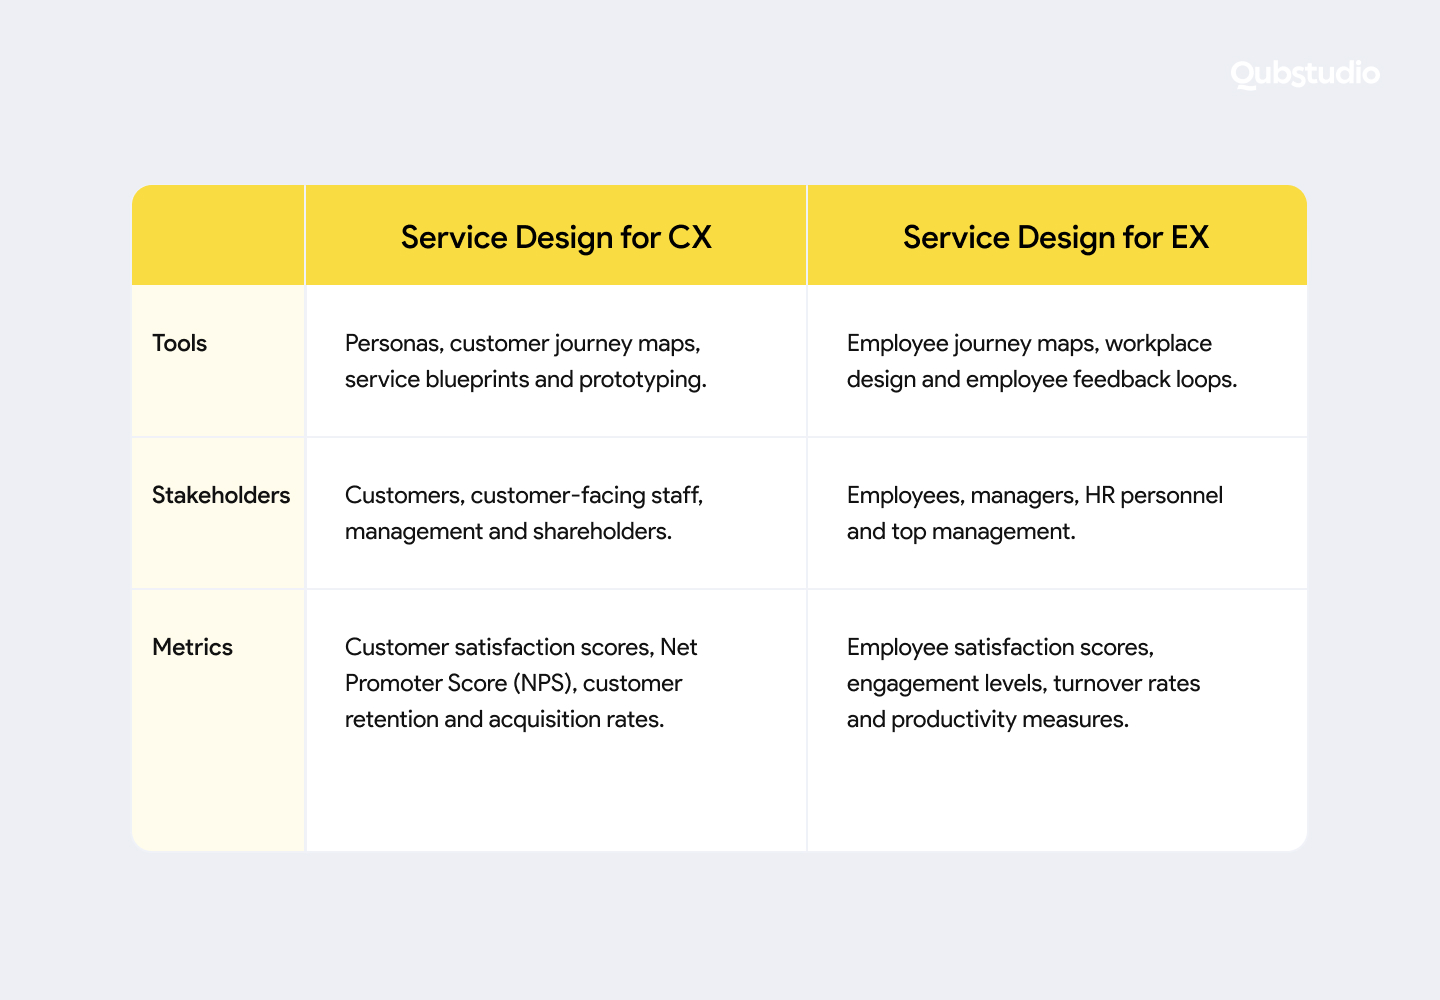 service design for ux vs ex